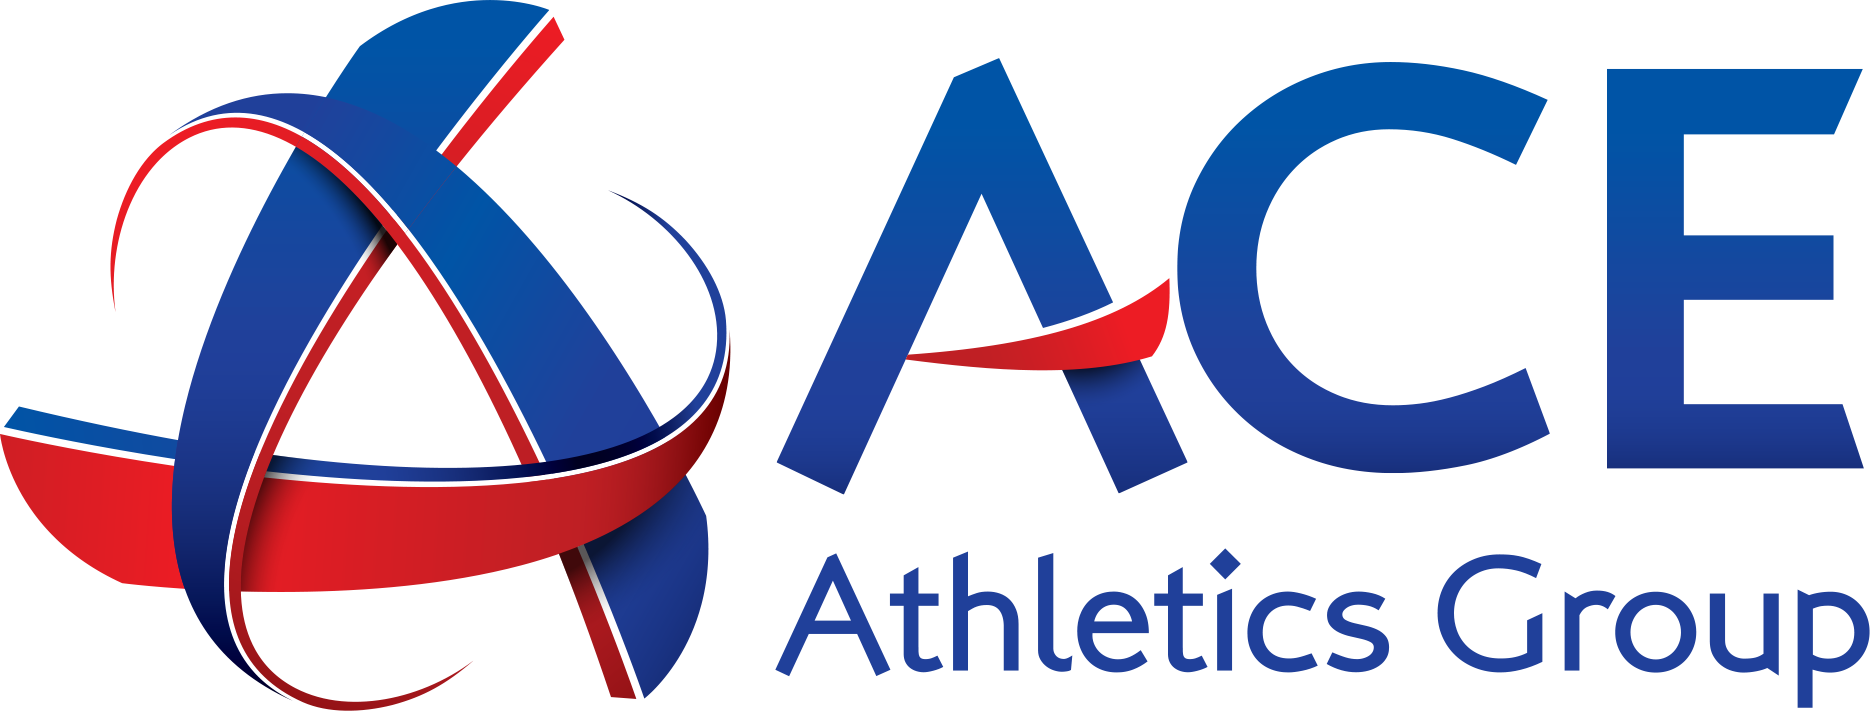 Ace Athletics Group Spring Swing Showdown Logo